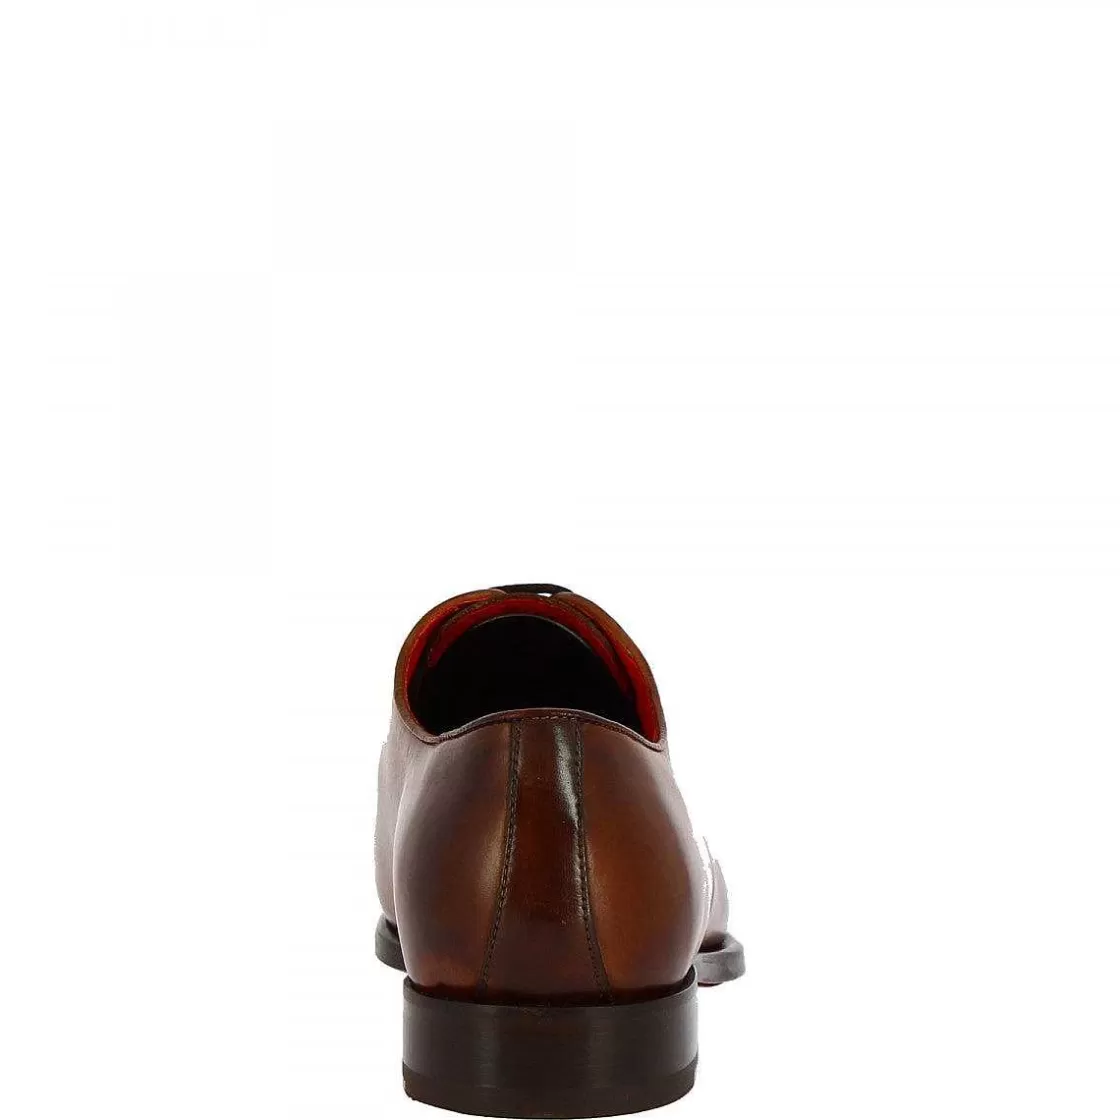 Leonardo Men'S Oxford Shoes Handmade In Brandy Delave Calfskin Clearance